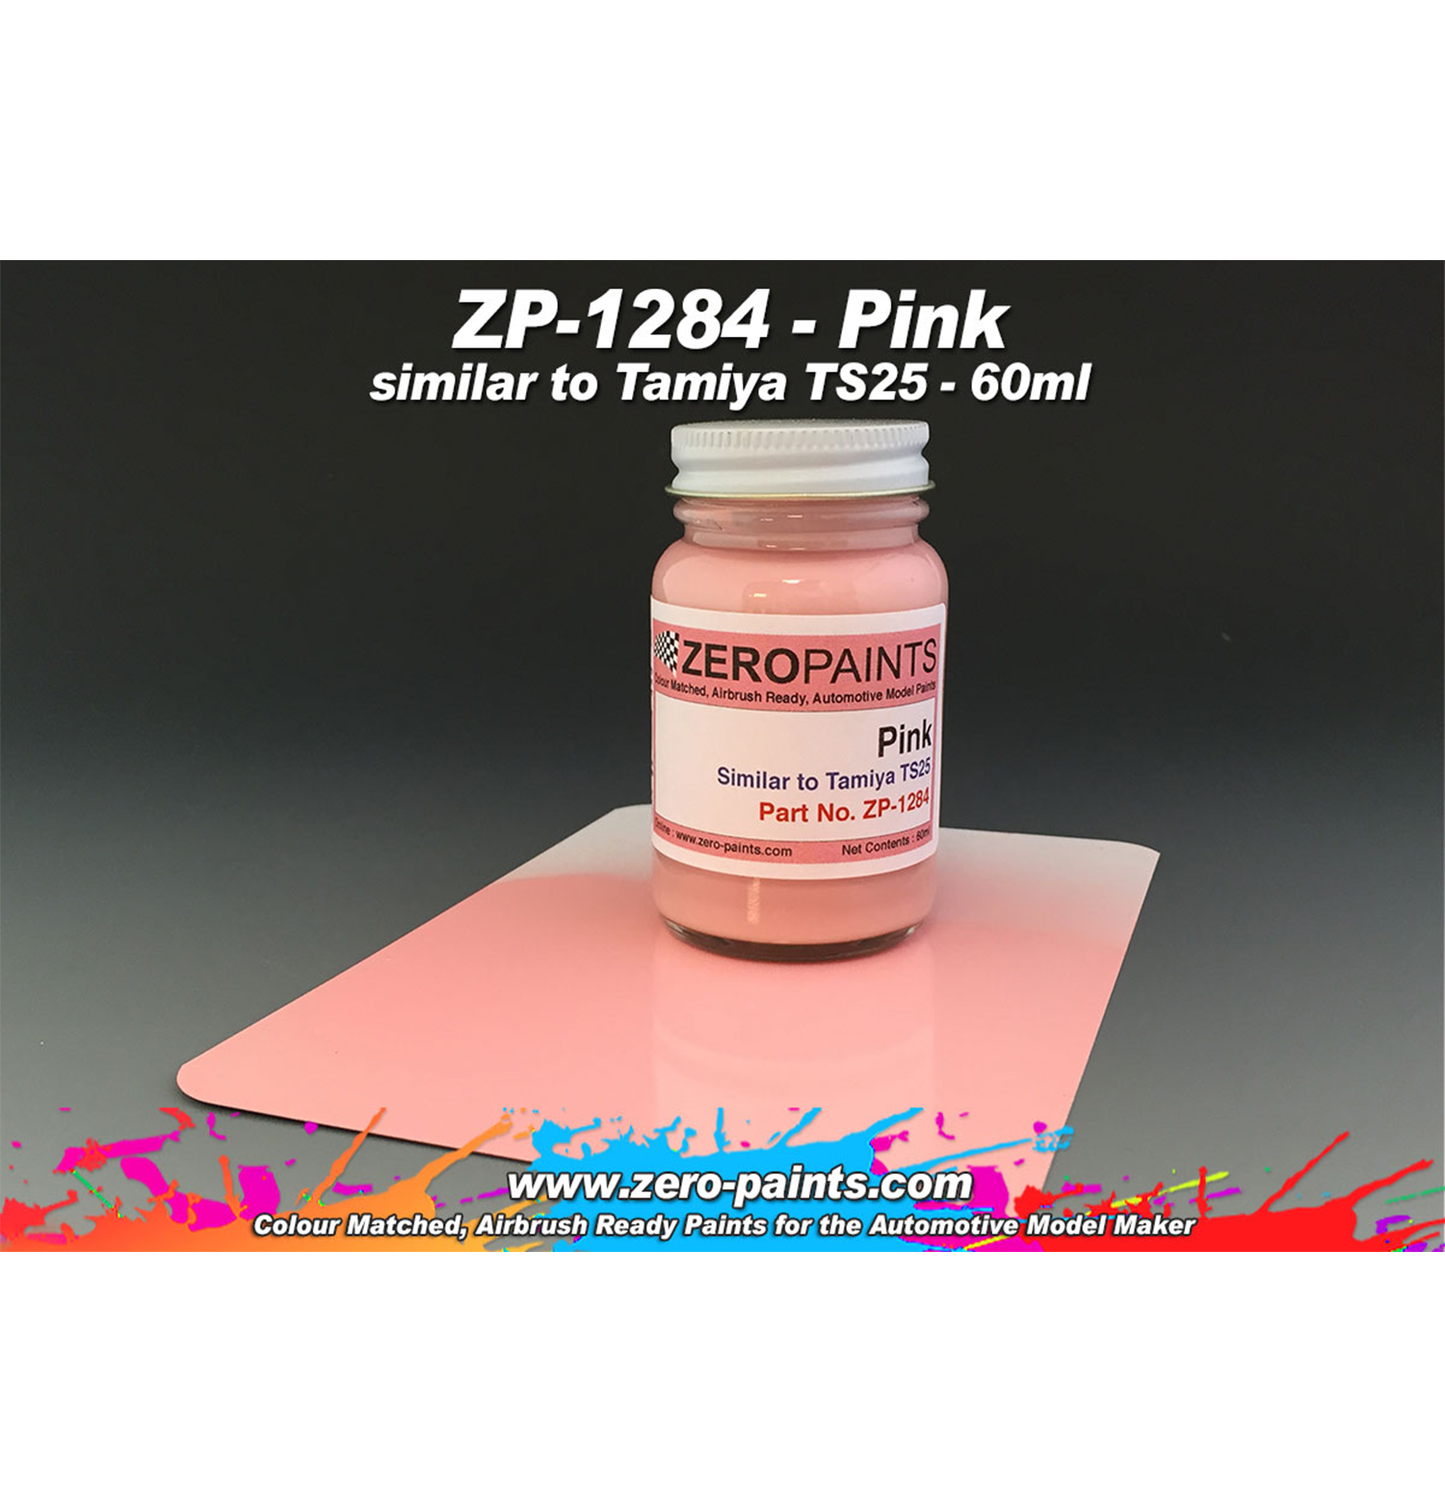 Zeropaints ZP-1284 - "PINK similar to Tamiya TS 25 "